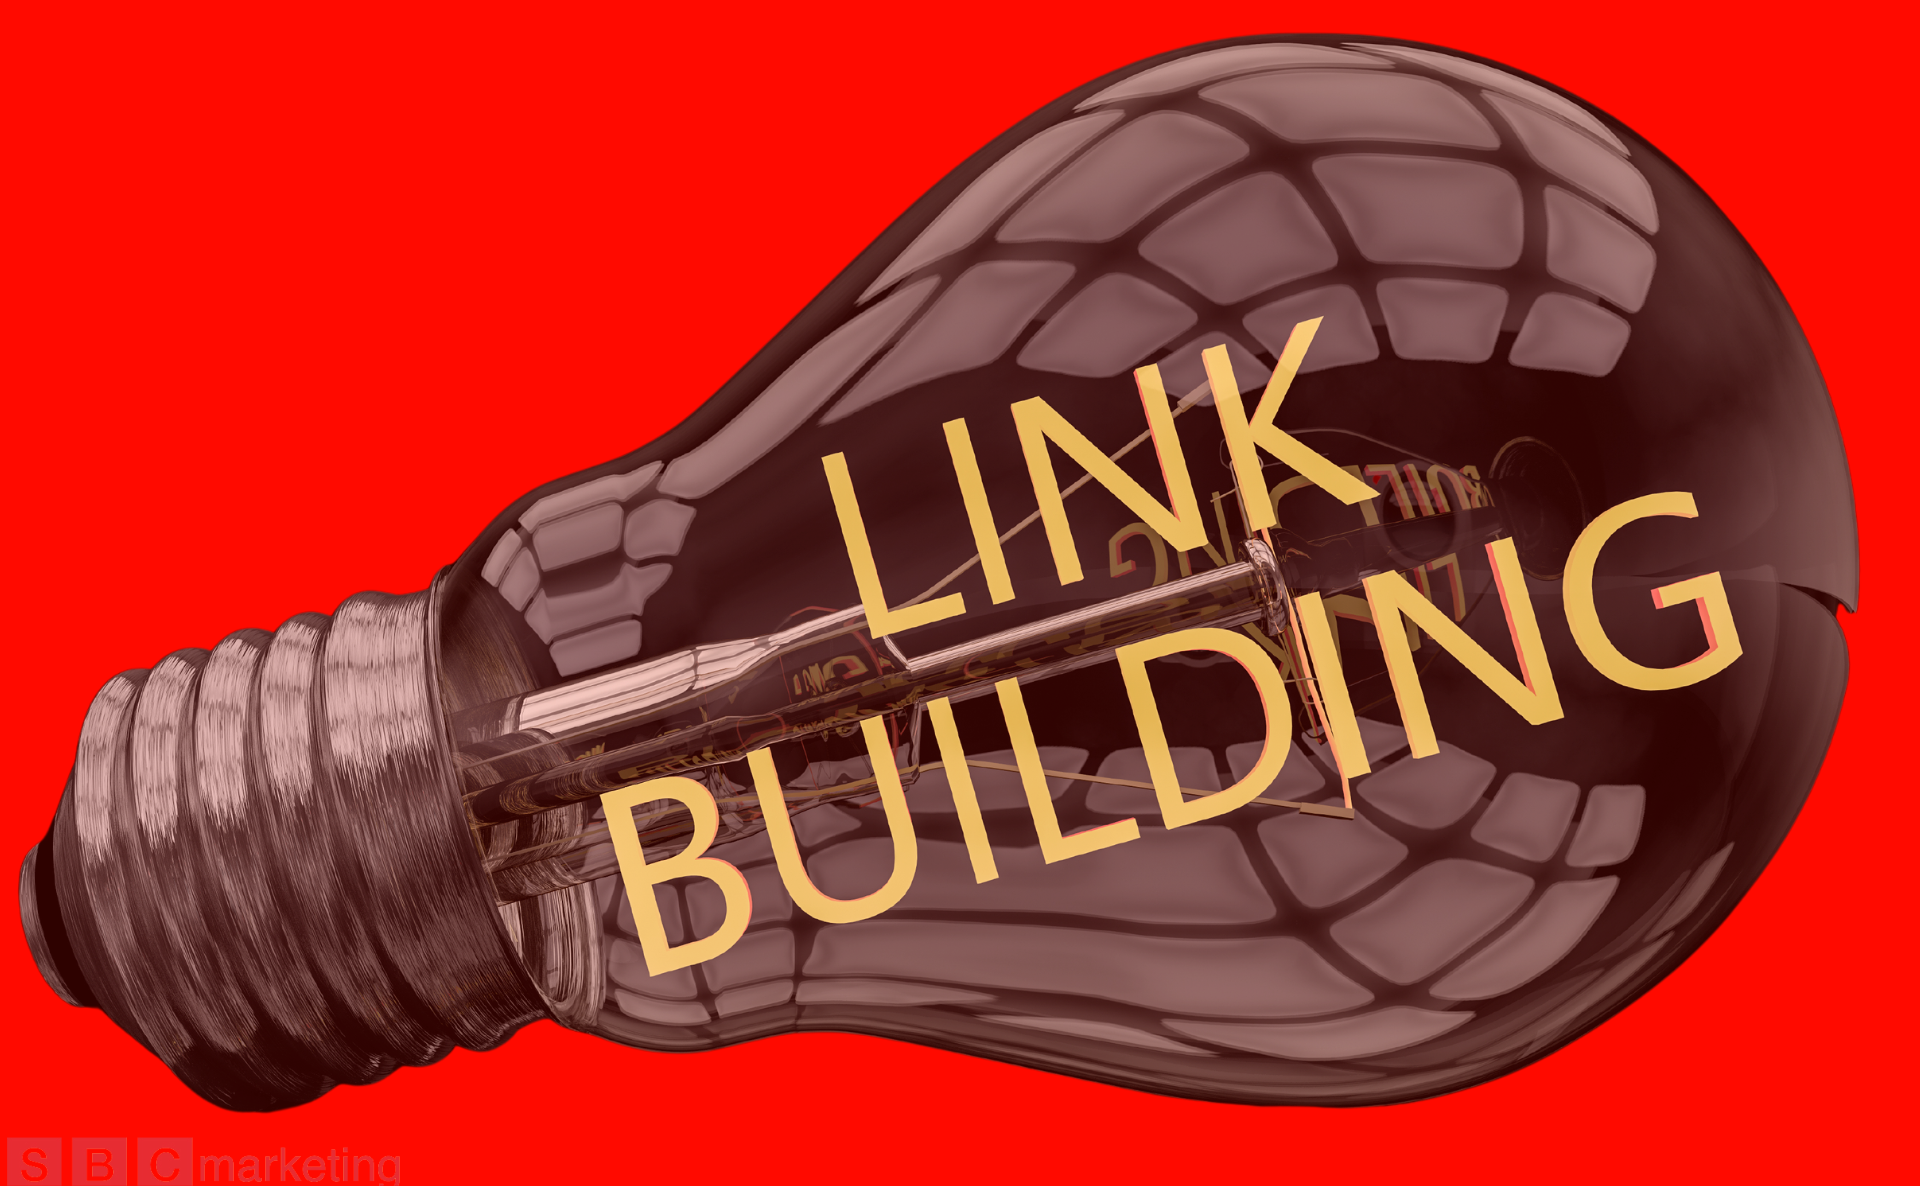 Link Building Service